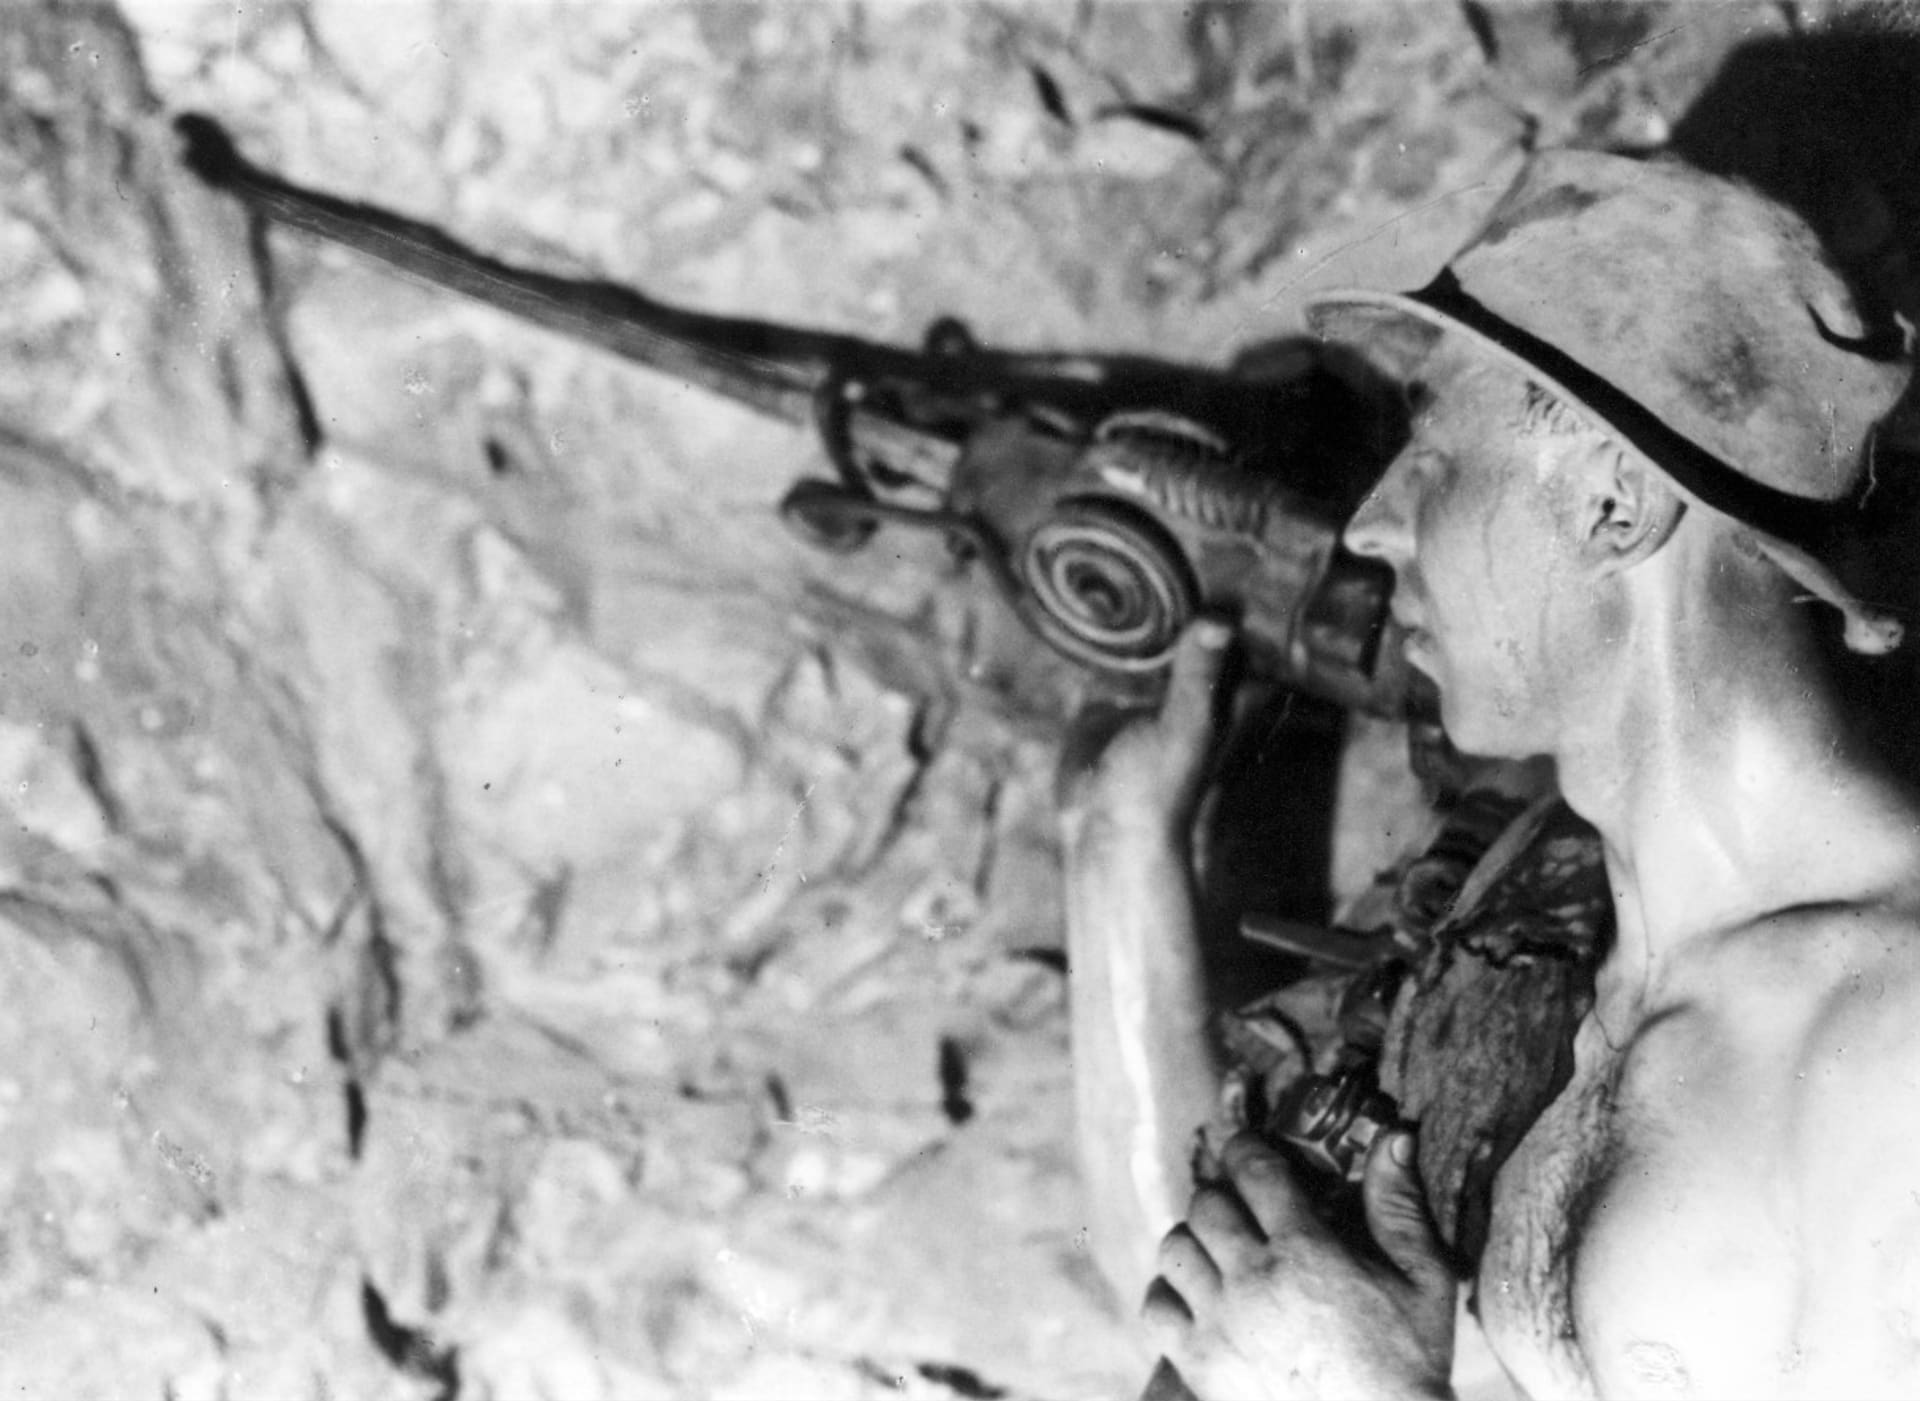 prace v podzemi strojni vrtani cca 1930 